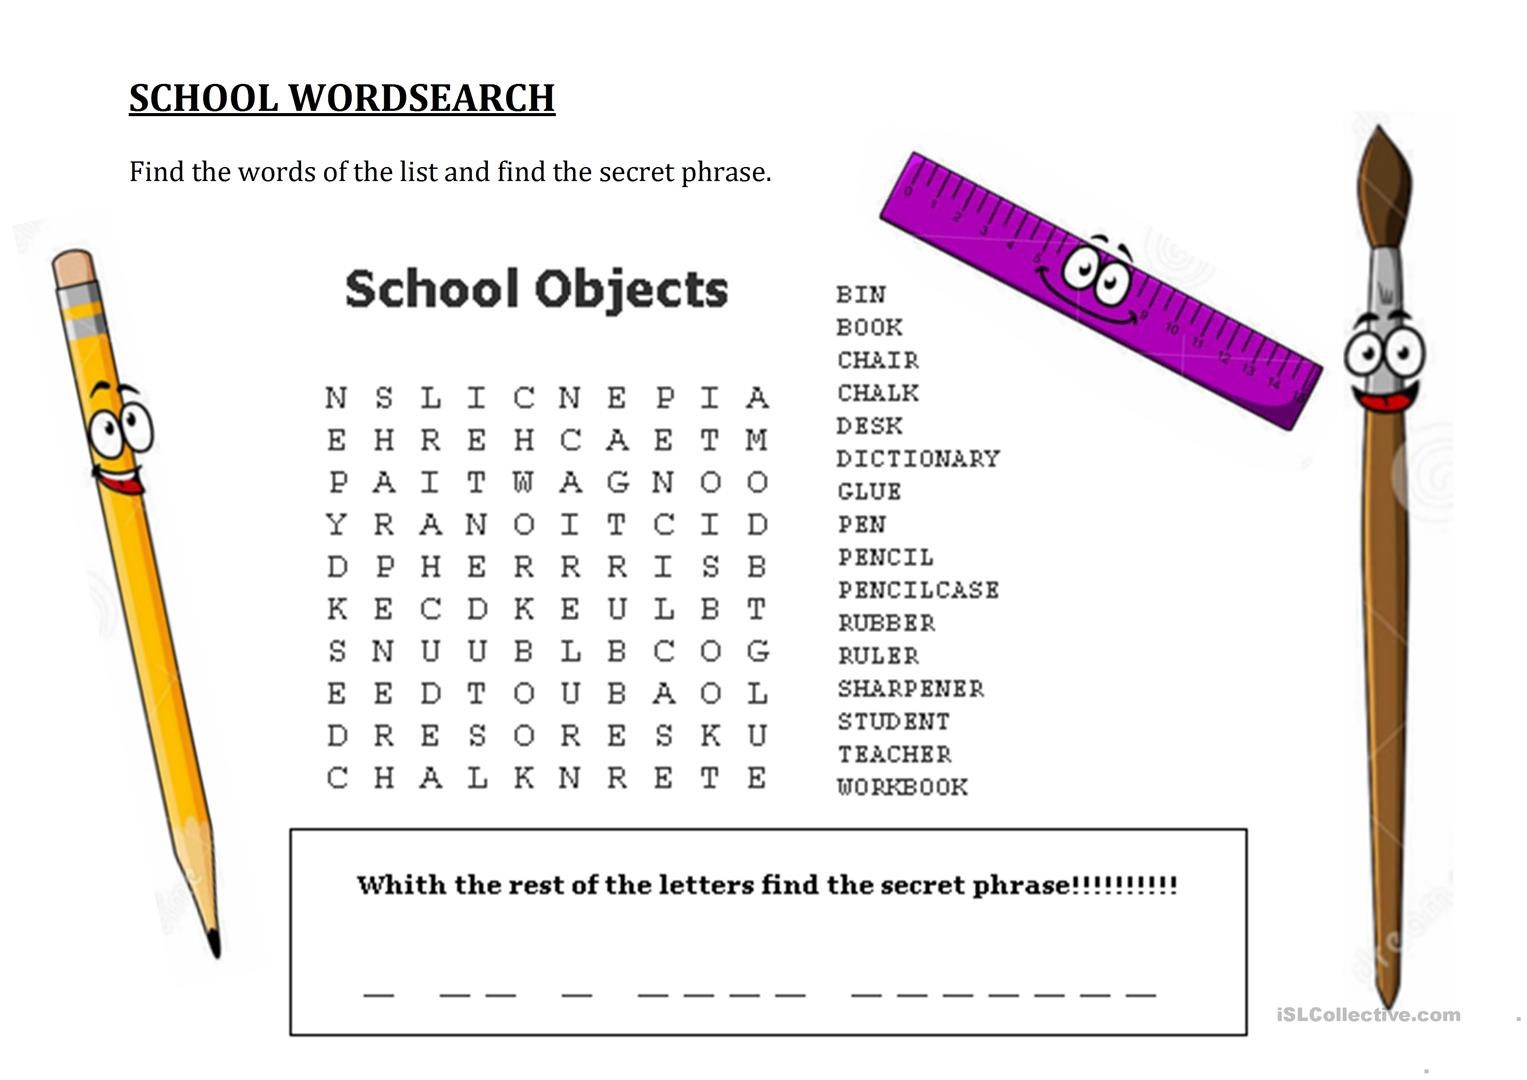 School Wordsearch - Hidden Message Worksheet - Free Esl Printable - Free Word Search With Hidden Message Printable